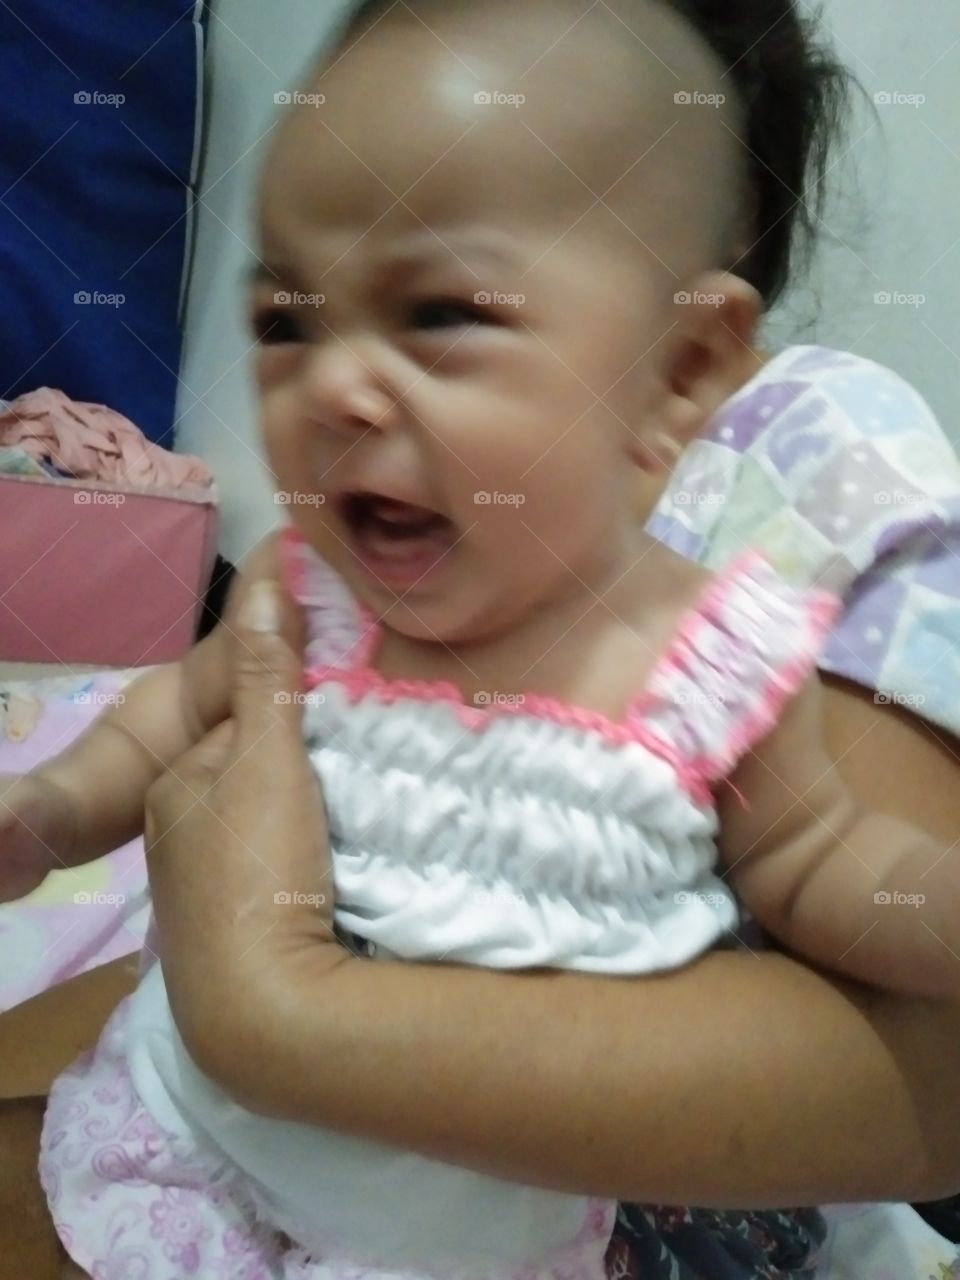 she is crying na hahaha